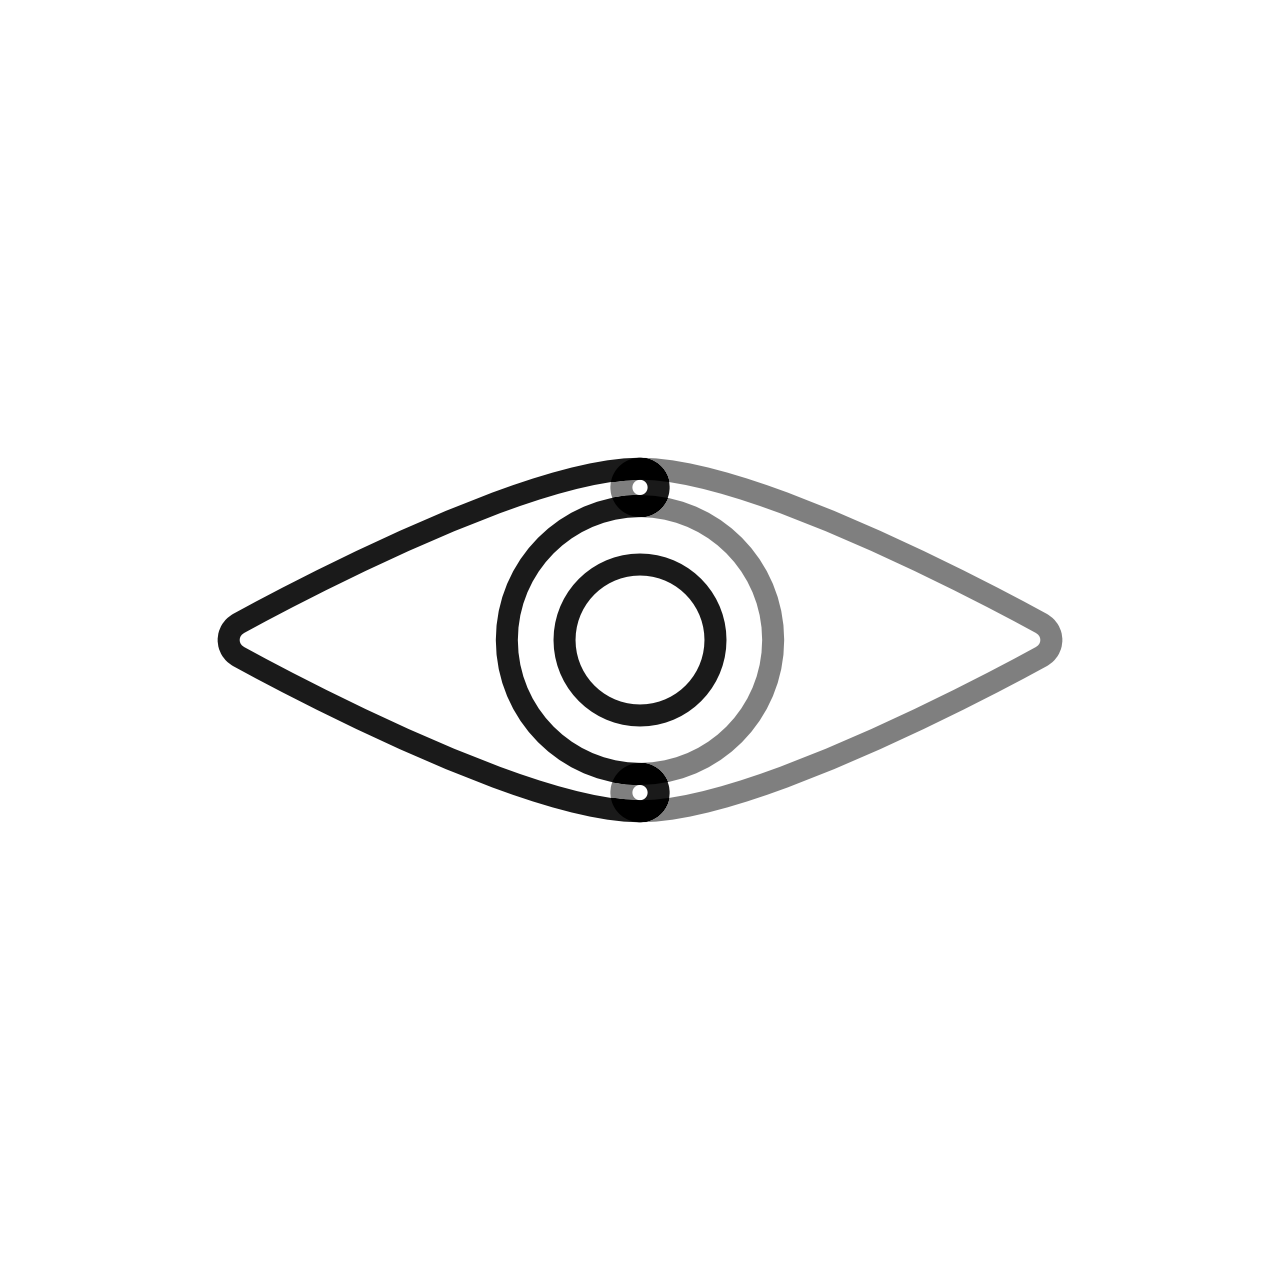 Logodesign Eye Layout Logo Doppel